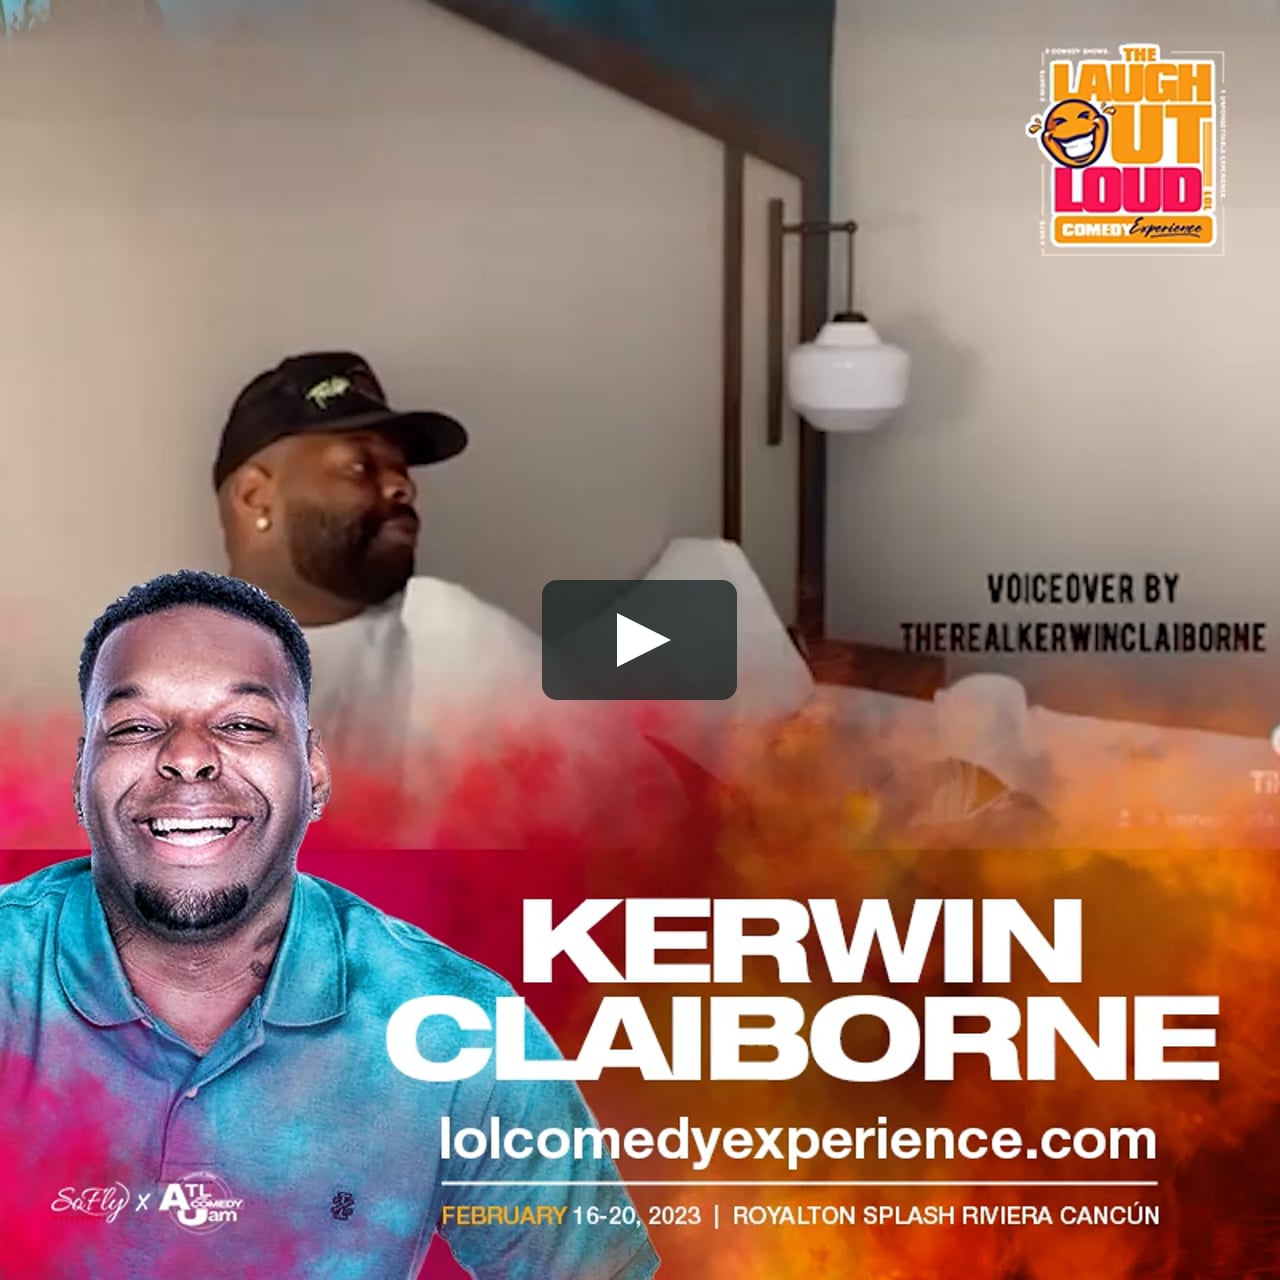 Kerwin Claiborne on Vimeo